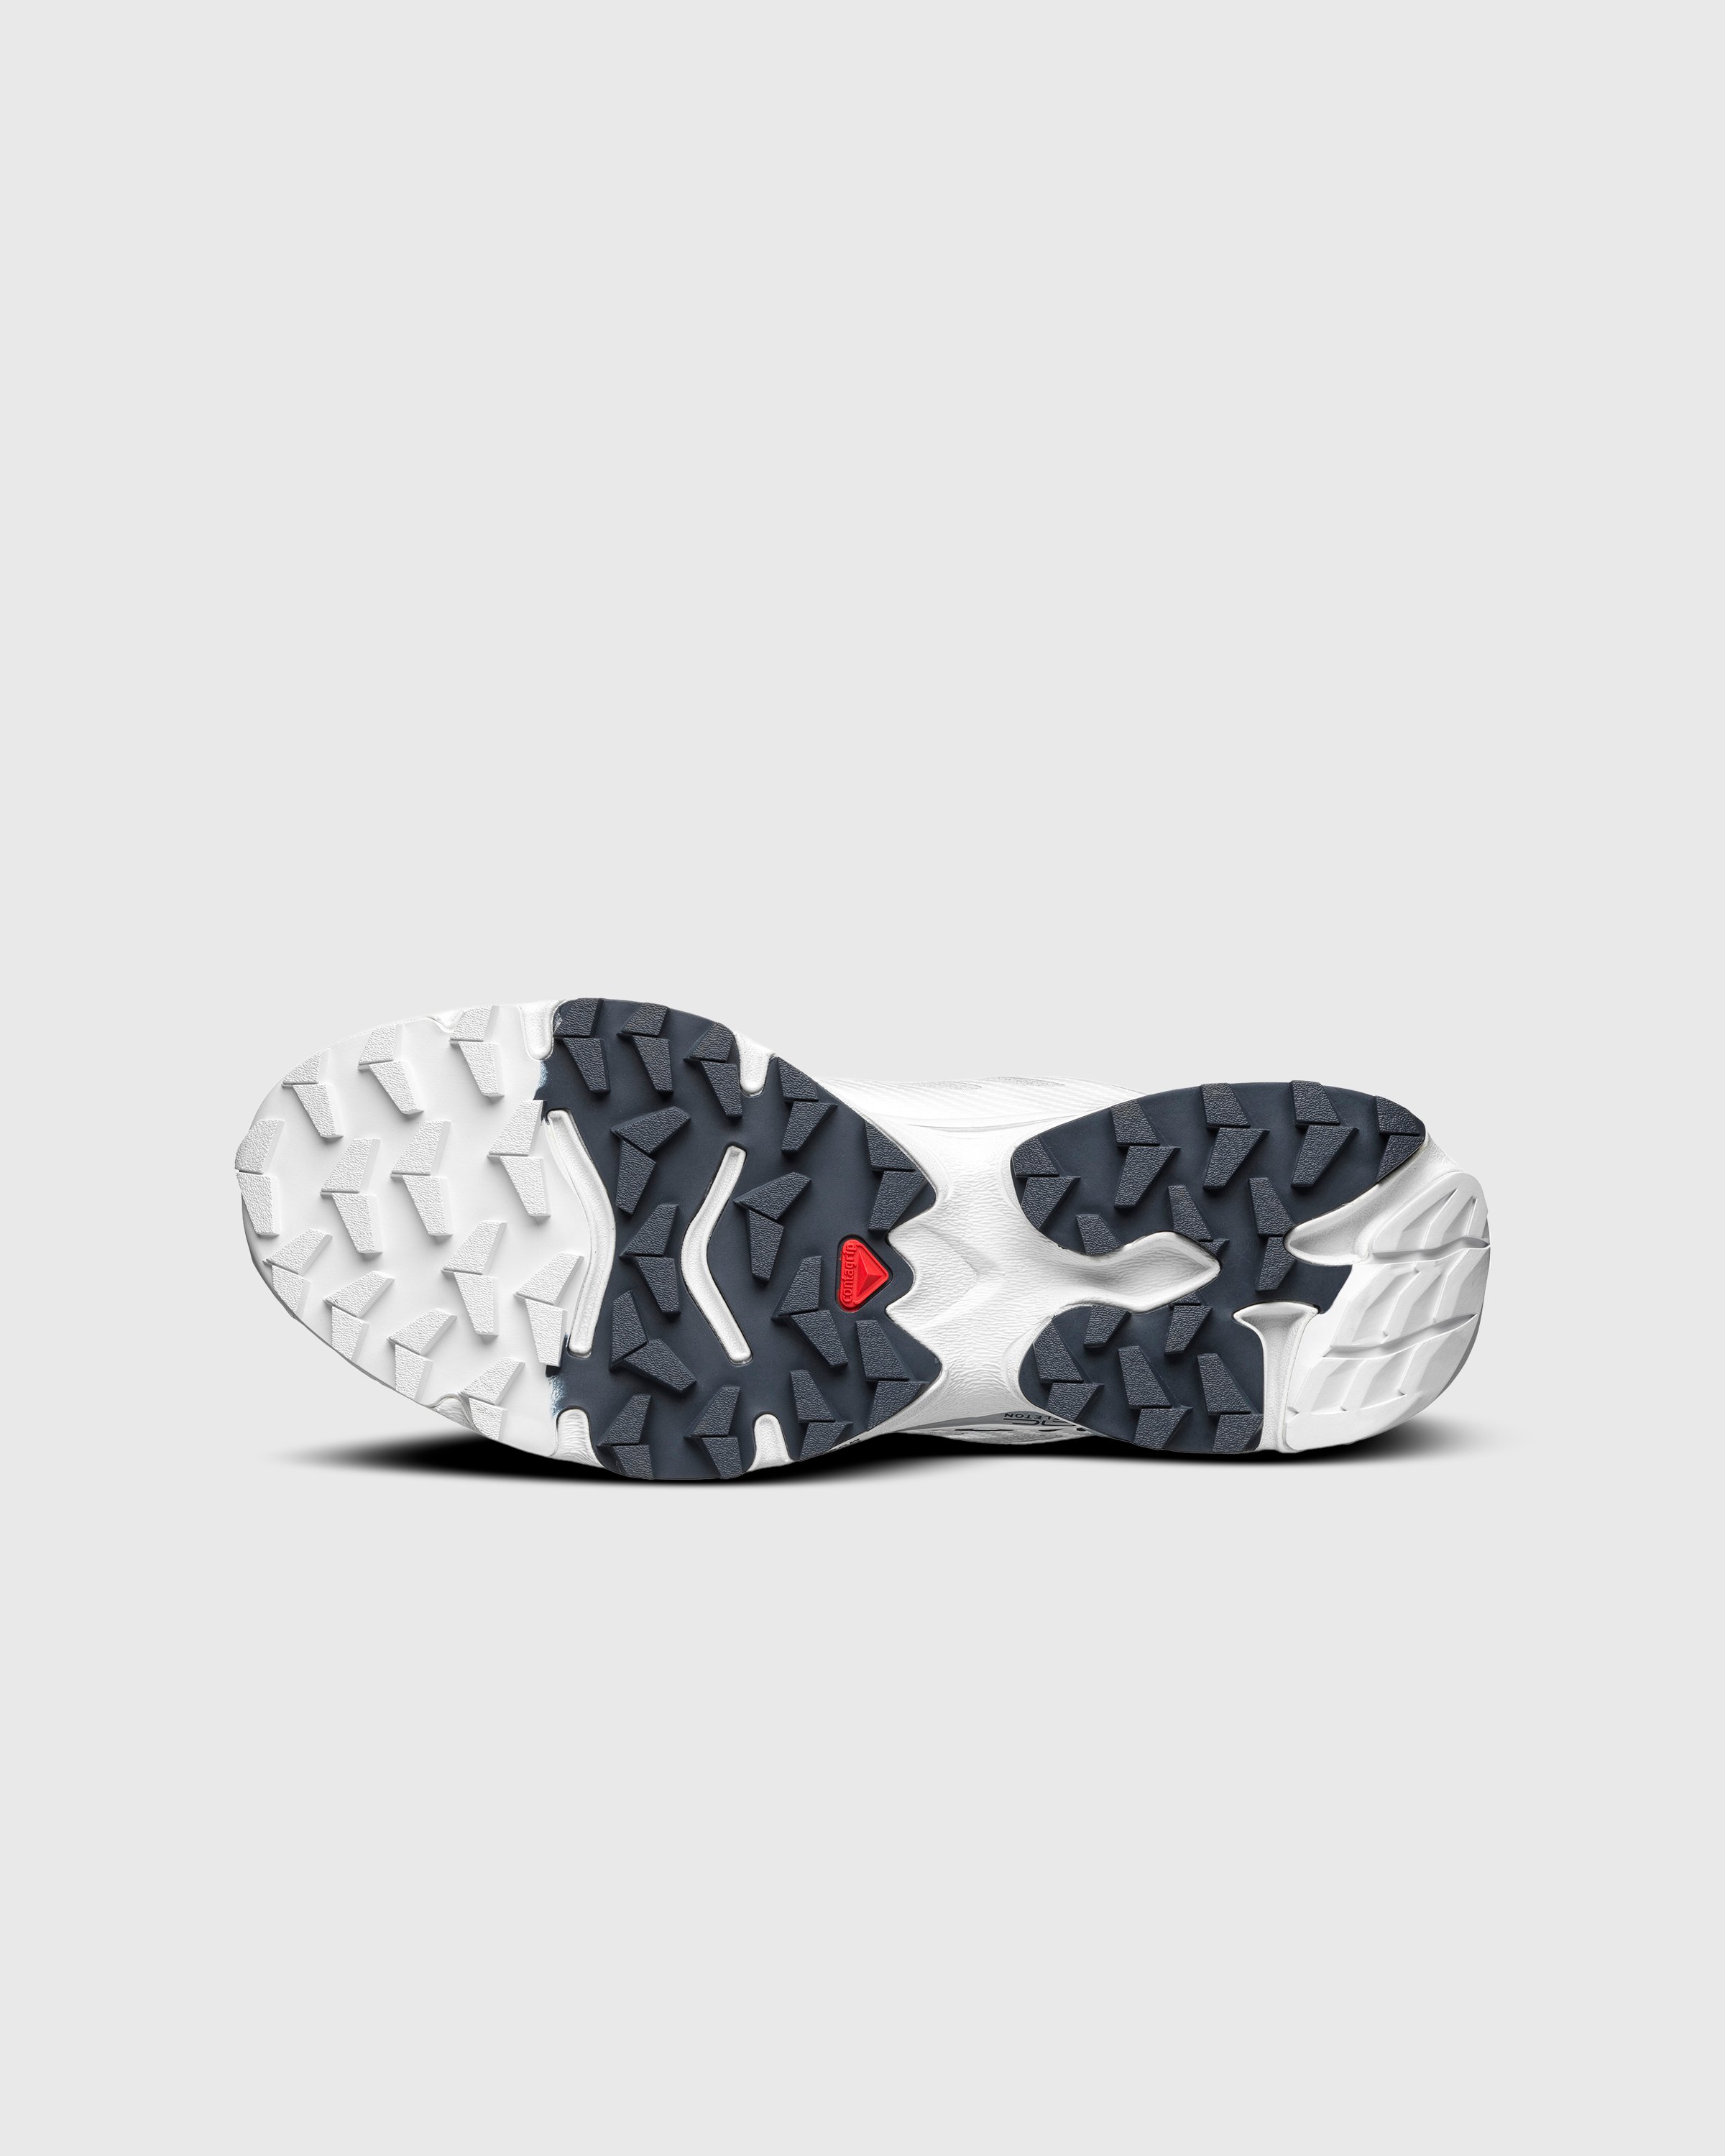 Salomon - XT-4 OG White/Ebony/Lunar Rock - Footwear - White - Image 2